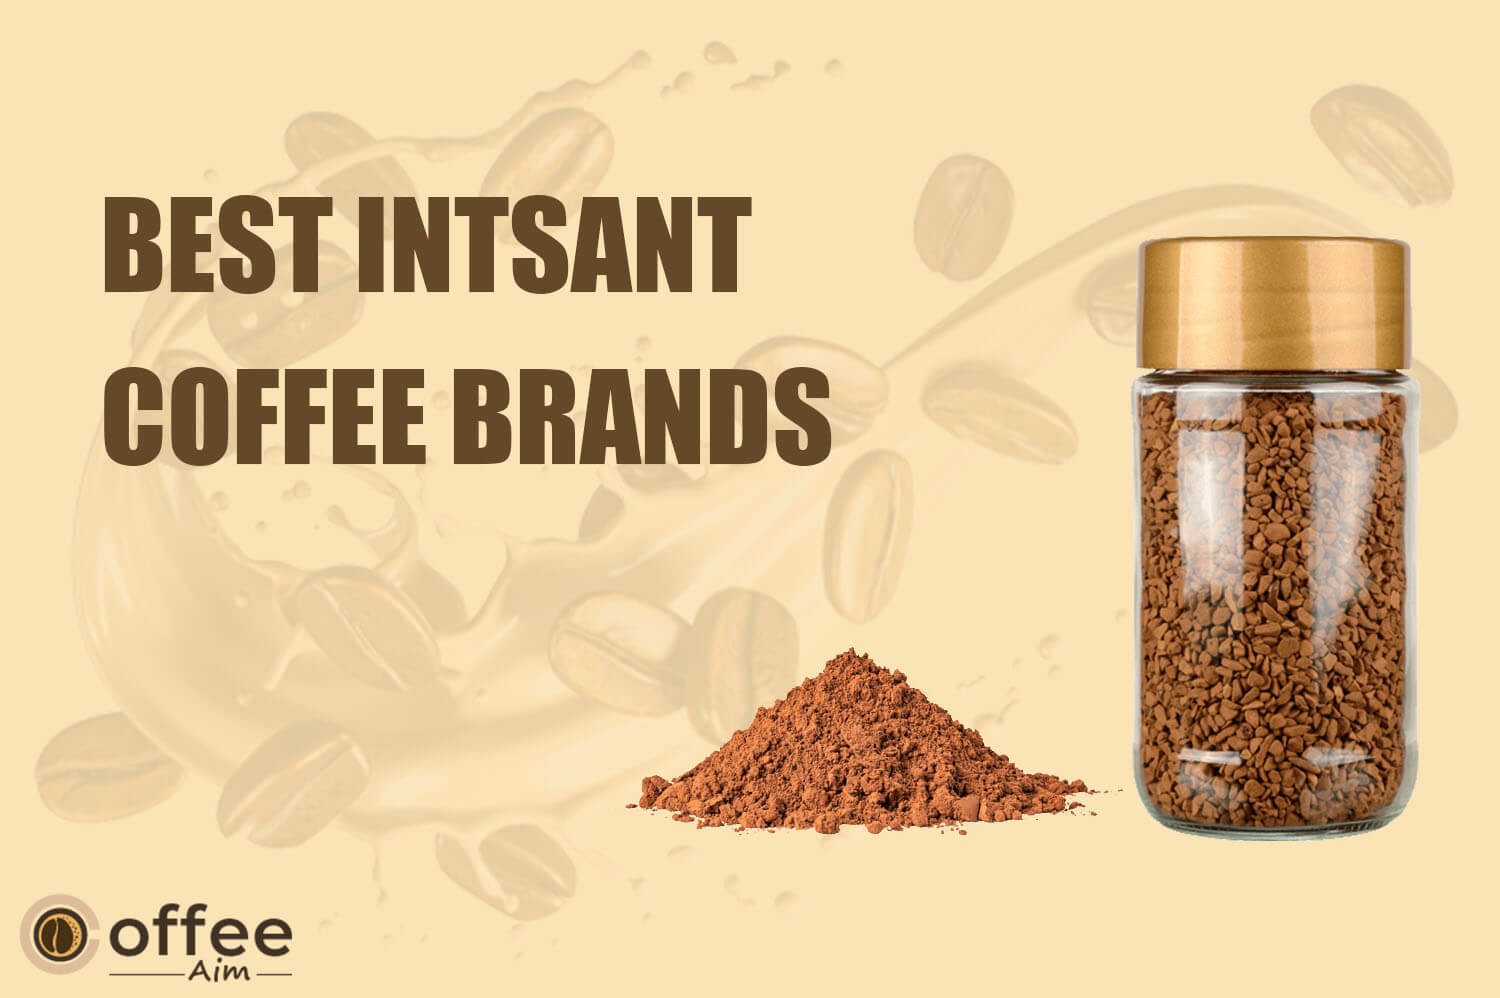 Nescafé 3 in 1 Instant Coffee Sticks ORIGINAL - Best Asian Coffee Imported  from Nestle Malaysia (28 Sticks)